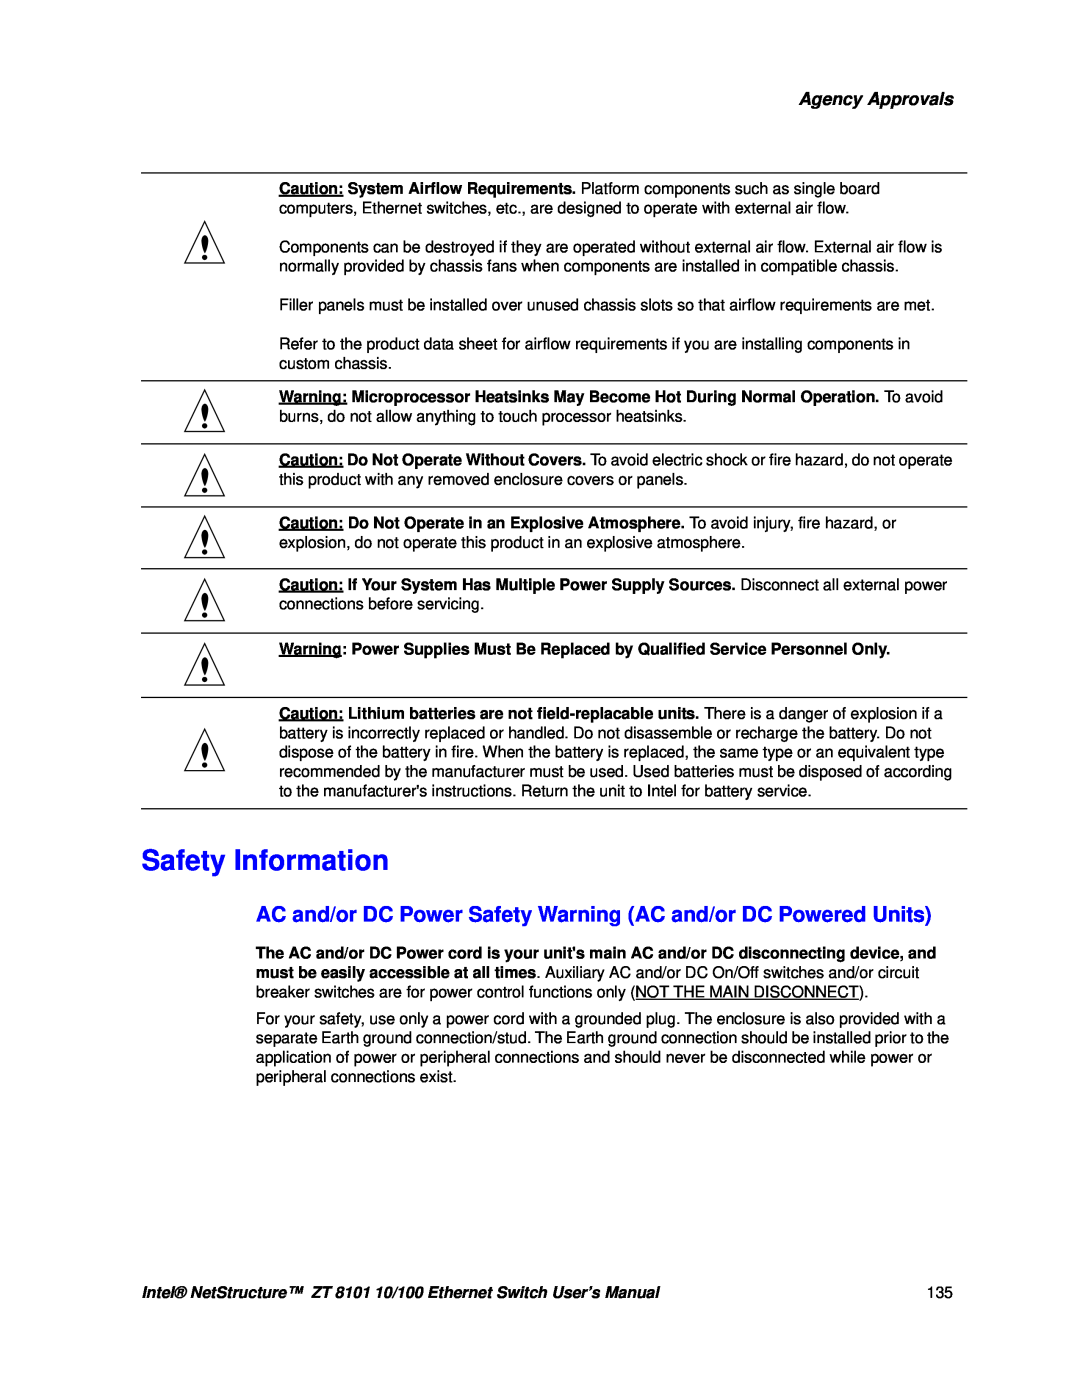 Intel ZT 8101 10/100 user manual Safety Information, Agency Approvals 